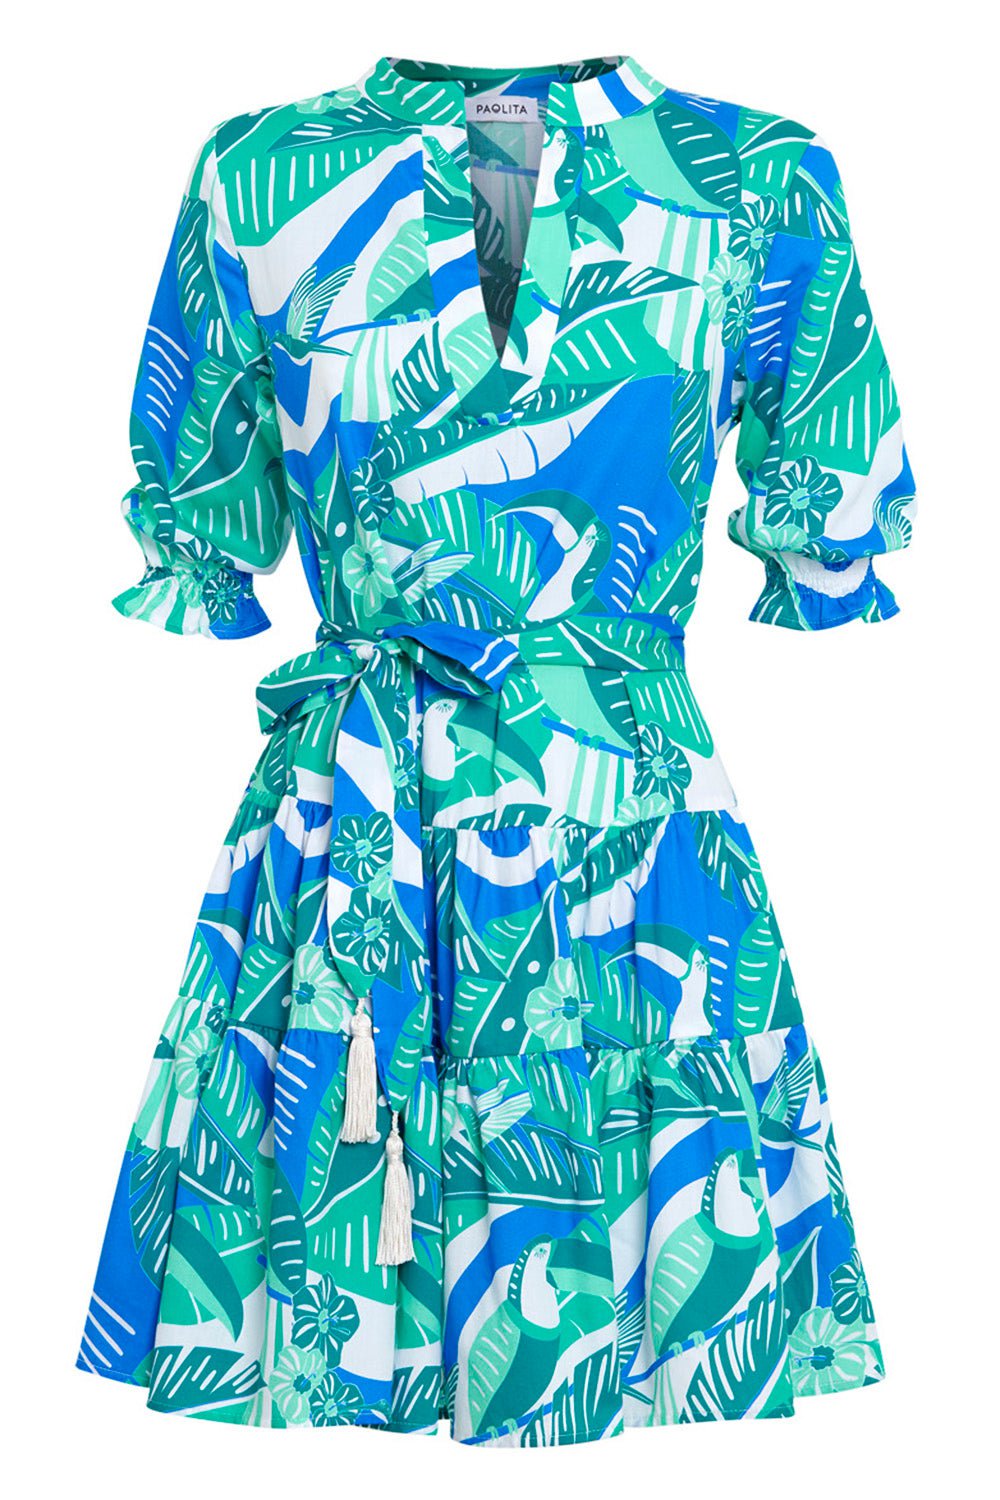 PAOLITA-Blue Lagoon Dress-